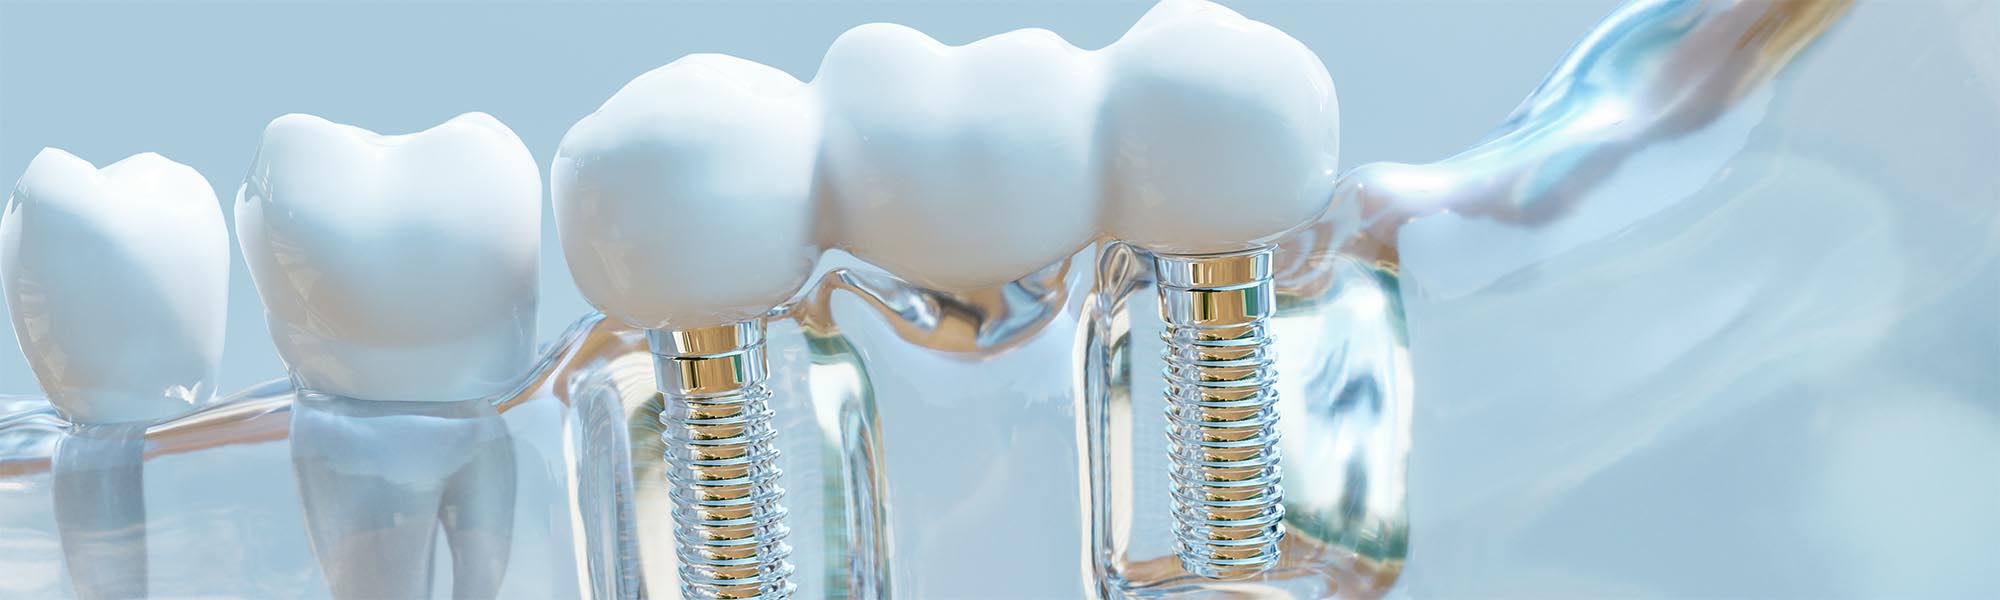 Dental Implants Benefits in Carson CA